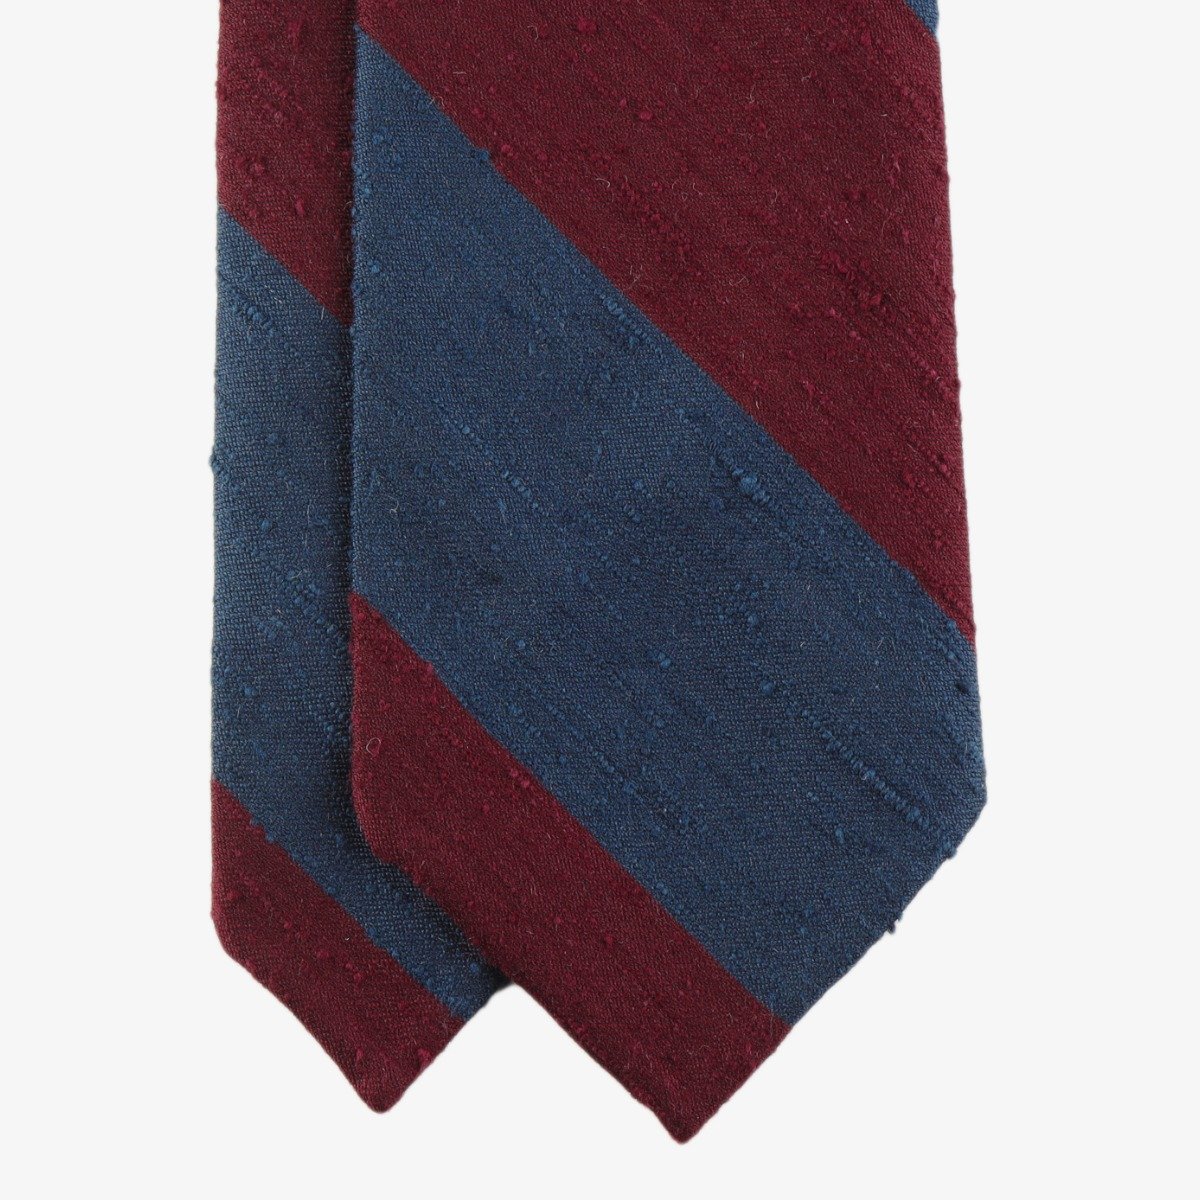 Shibumi Firenze navy and burgundy block stripe shantung silk tie